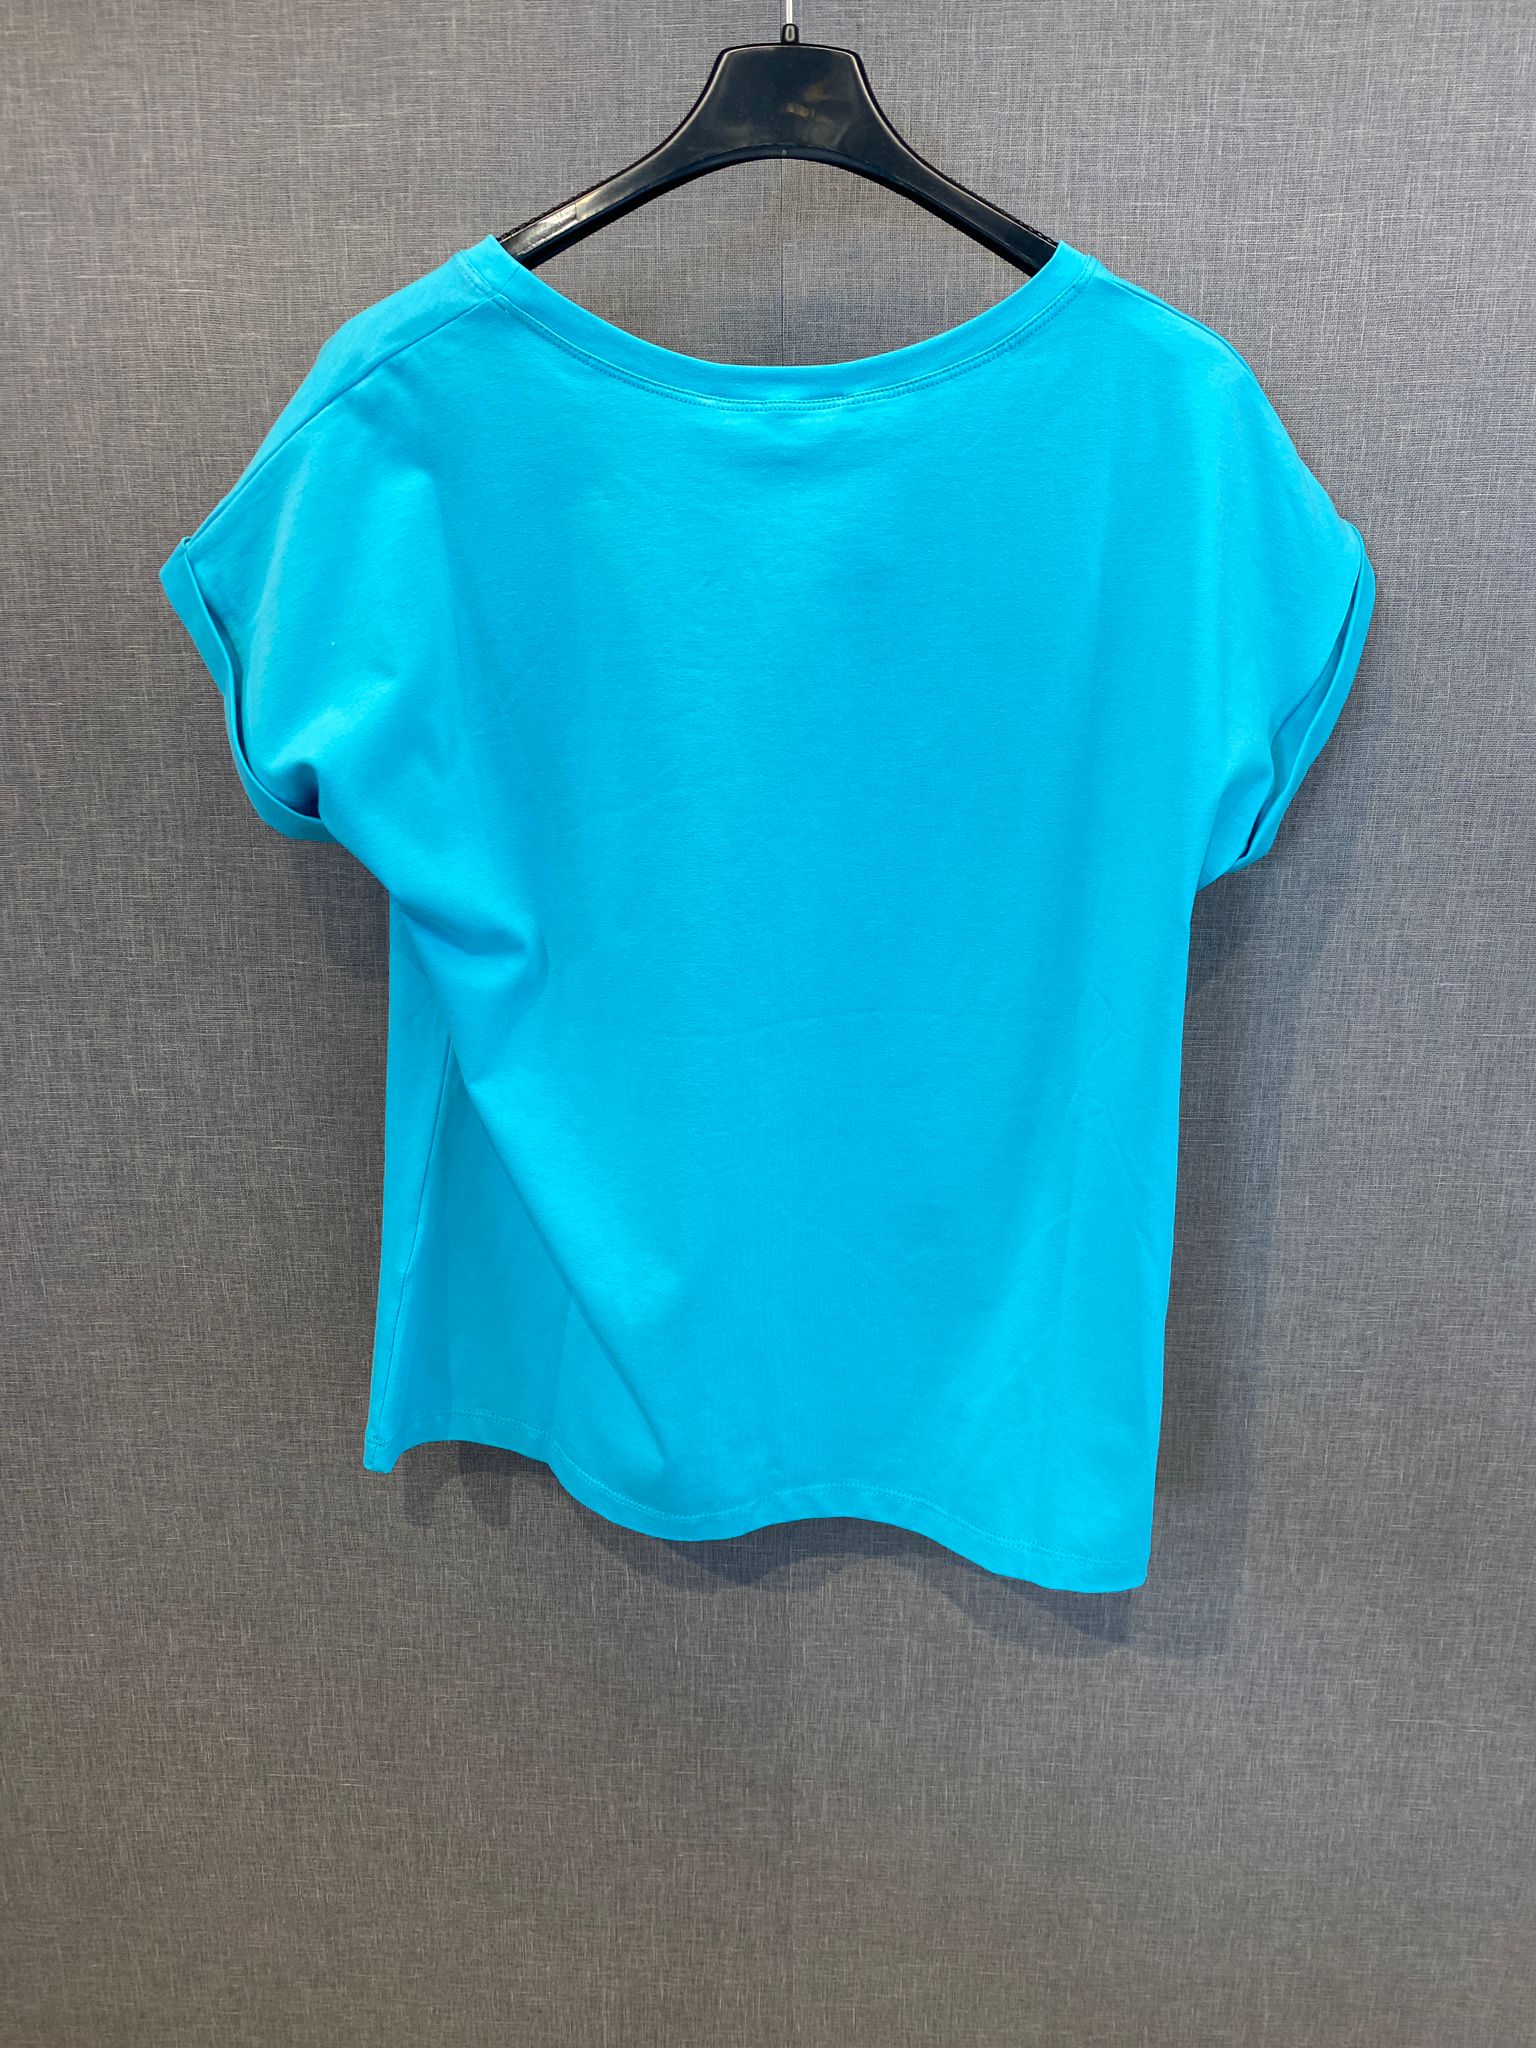 T-Shirt Turqoois Blue Iv ( Vicky/395 )